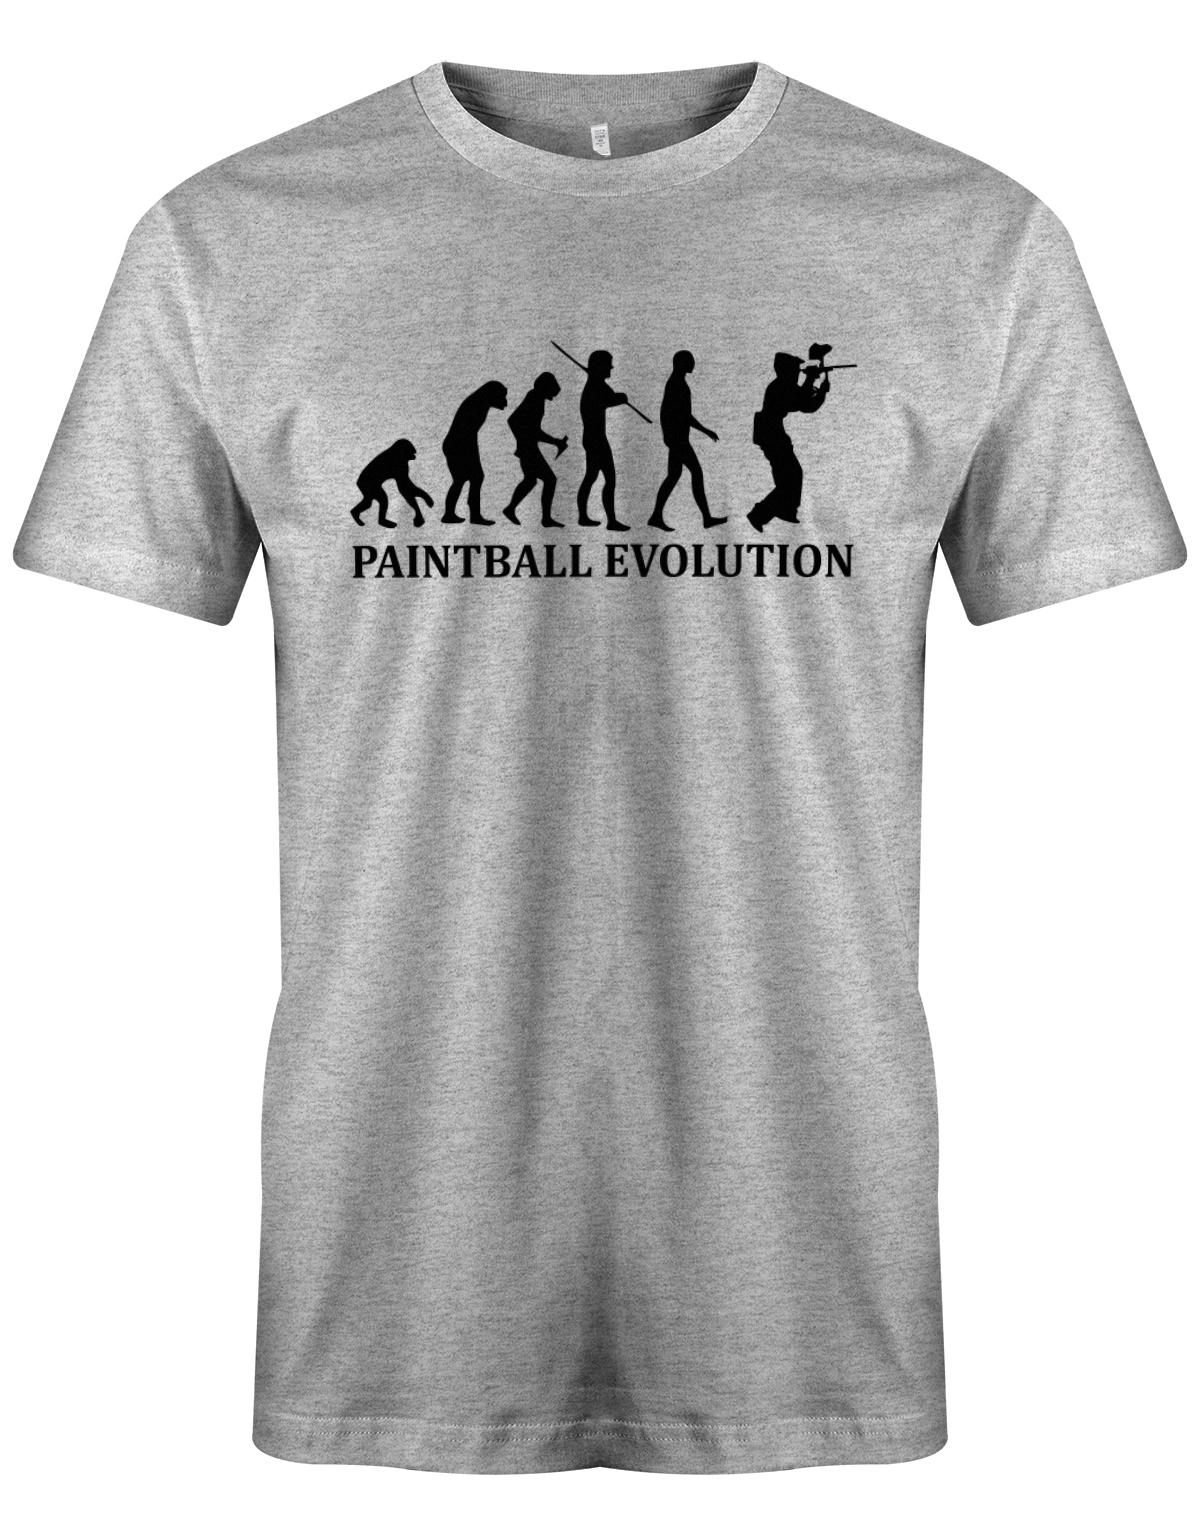 Paintball-Evolution-Herren-Shirt-Grau